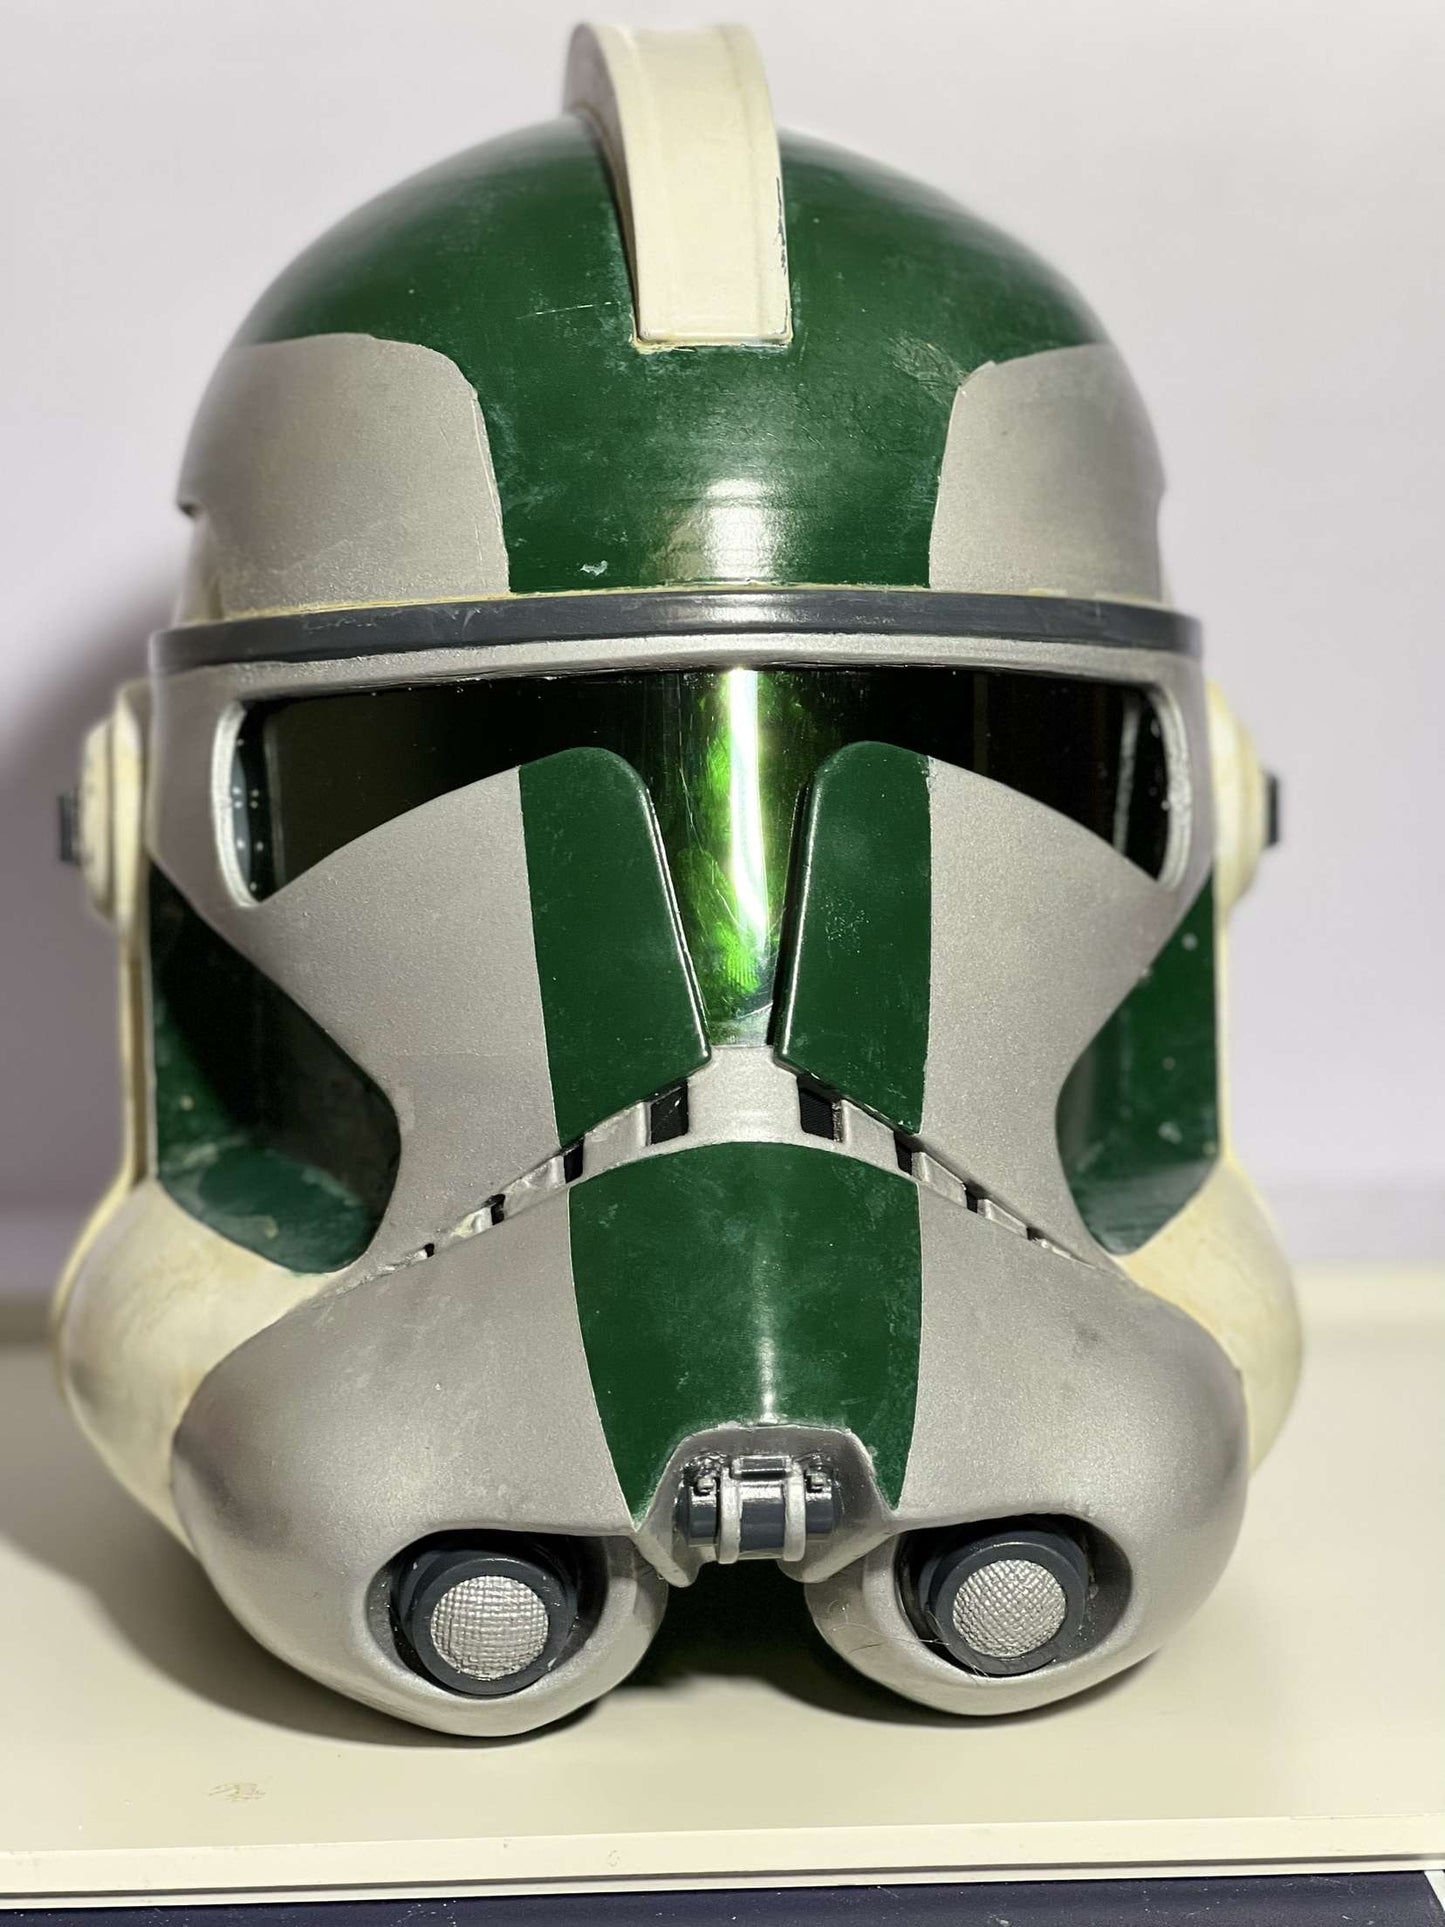 Star Wars Republic Commander Costume Cosplay helmet Gree stormtrooper Full Size